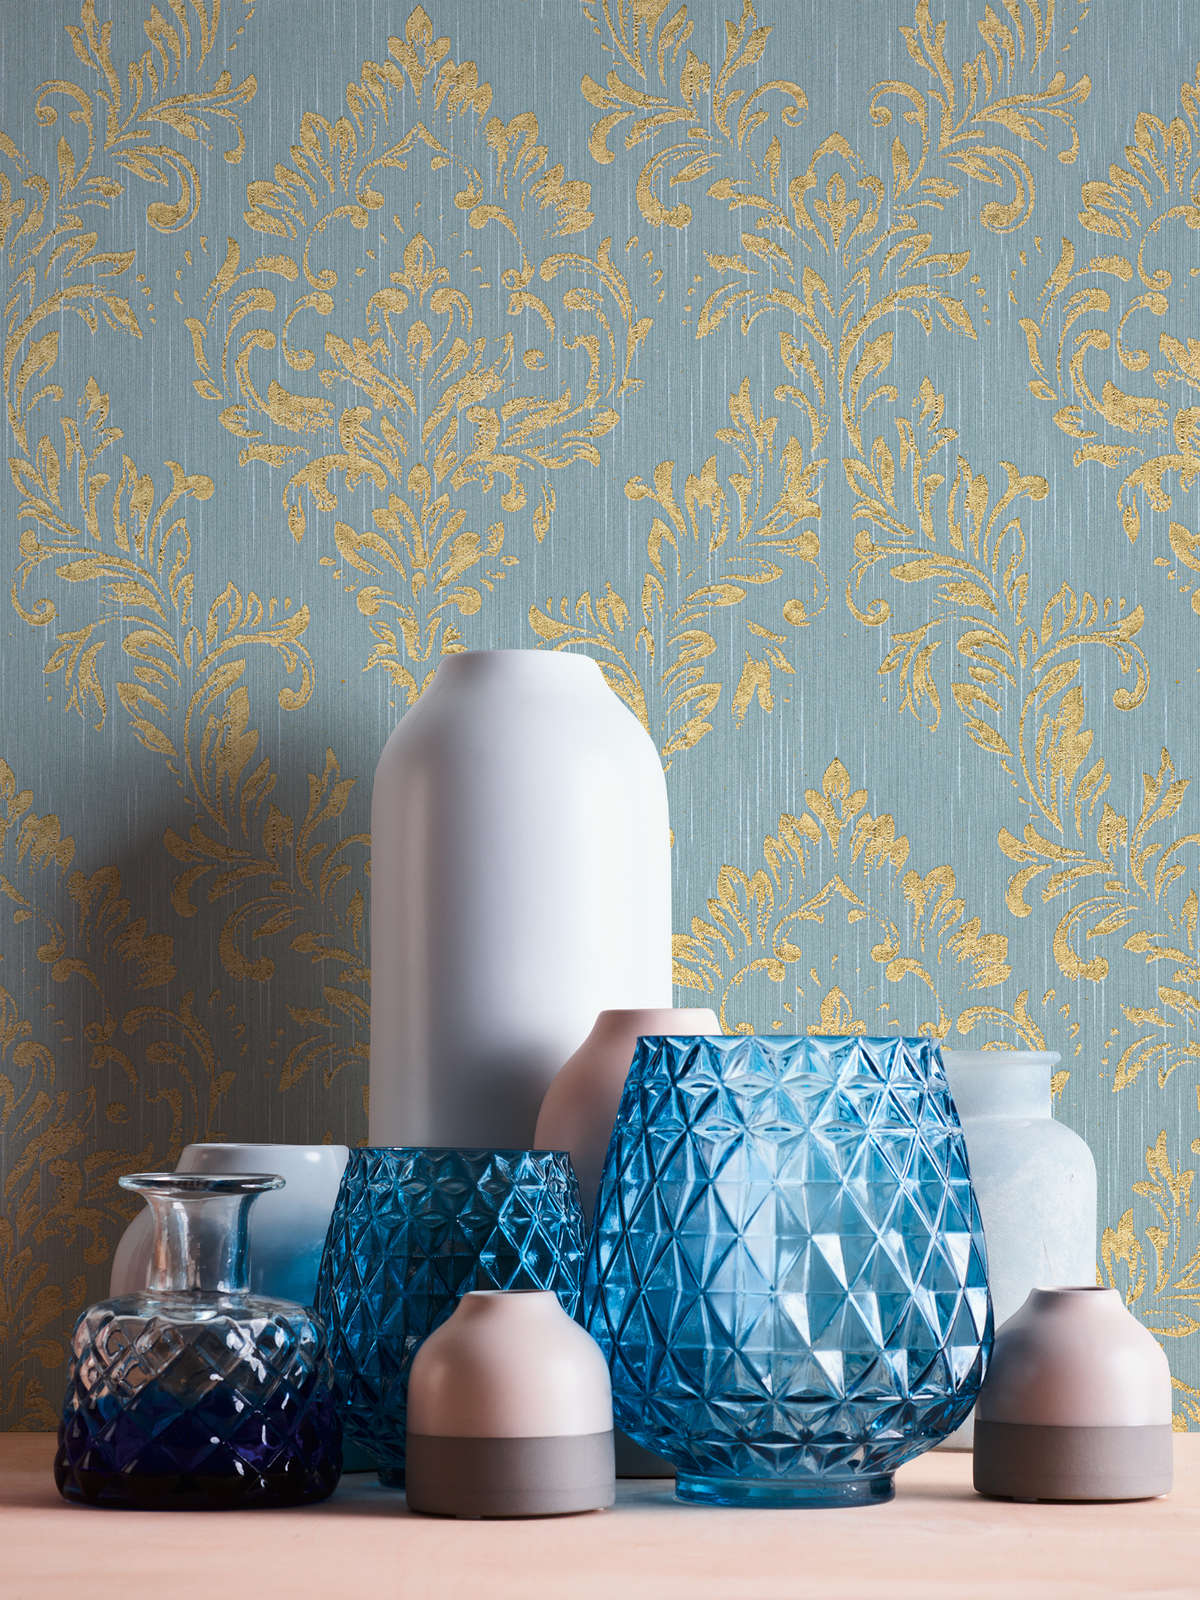             Ornament-Tapete floral mit goldenem Glitzer-Effekt – Gold, Blau, Grün
        